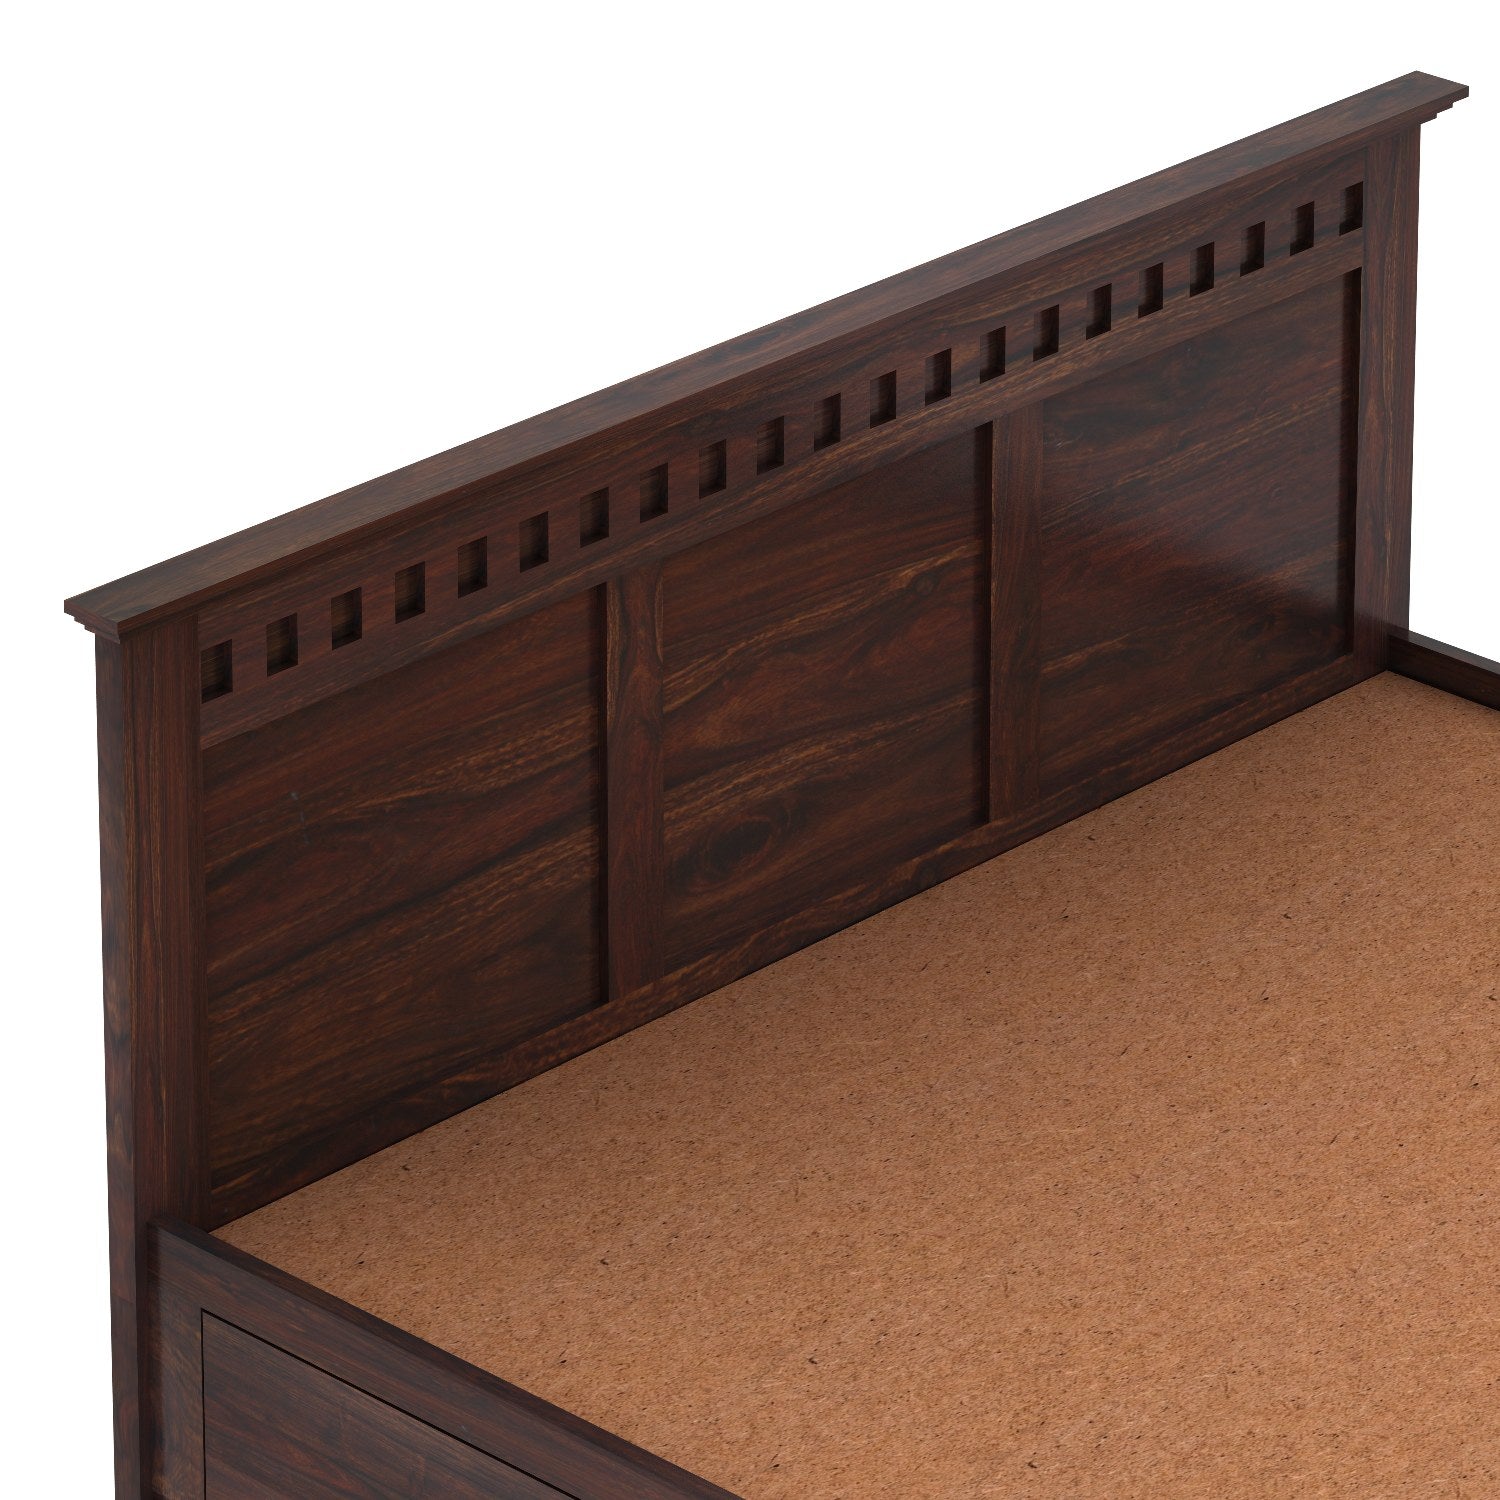 Amer Solid Sheesham Wood Hydraulic Bed With Box Storage (King Size, Walnut Finish)